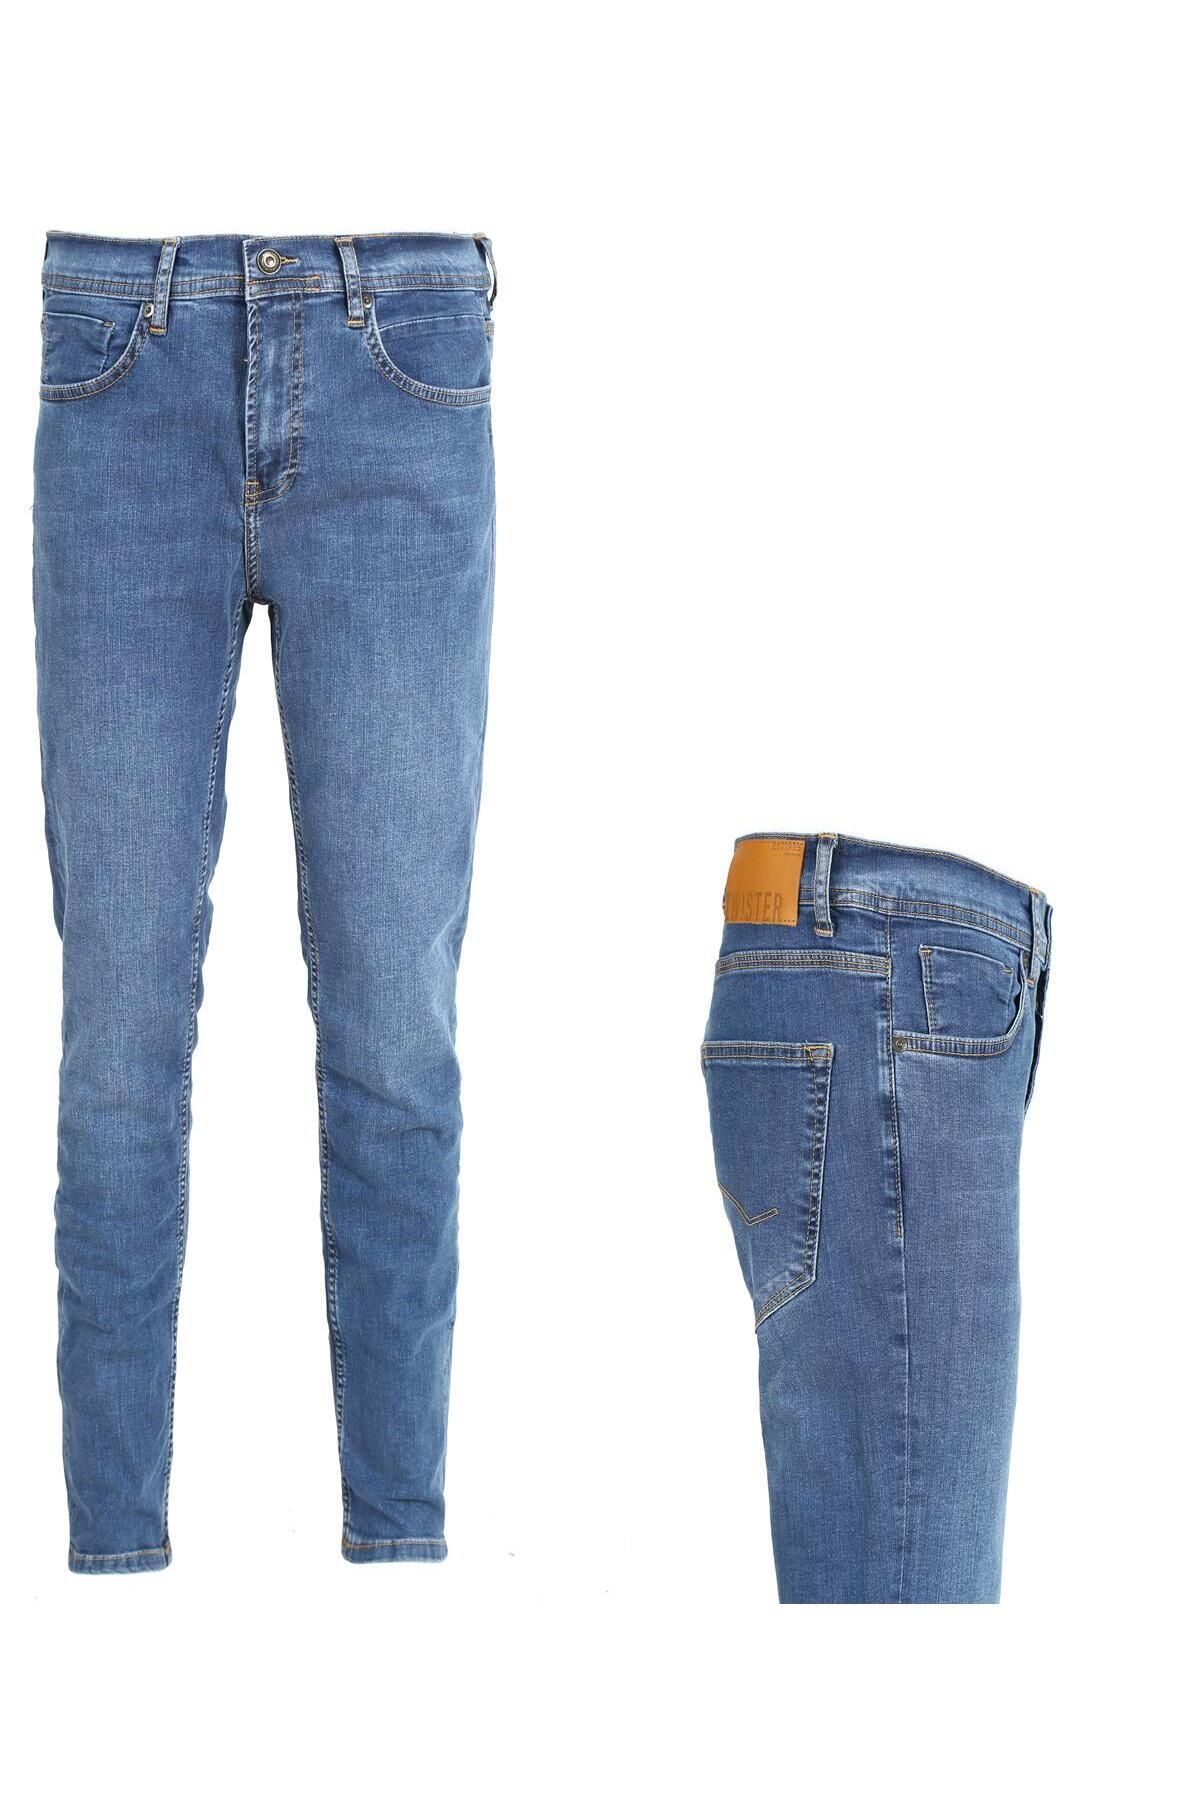 Twister Jeans Erkek Pantolon Gana 636-11 Blue